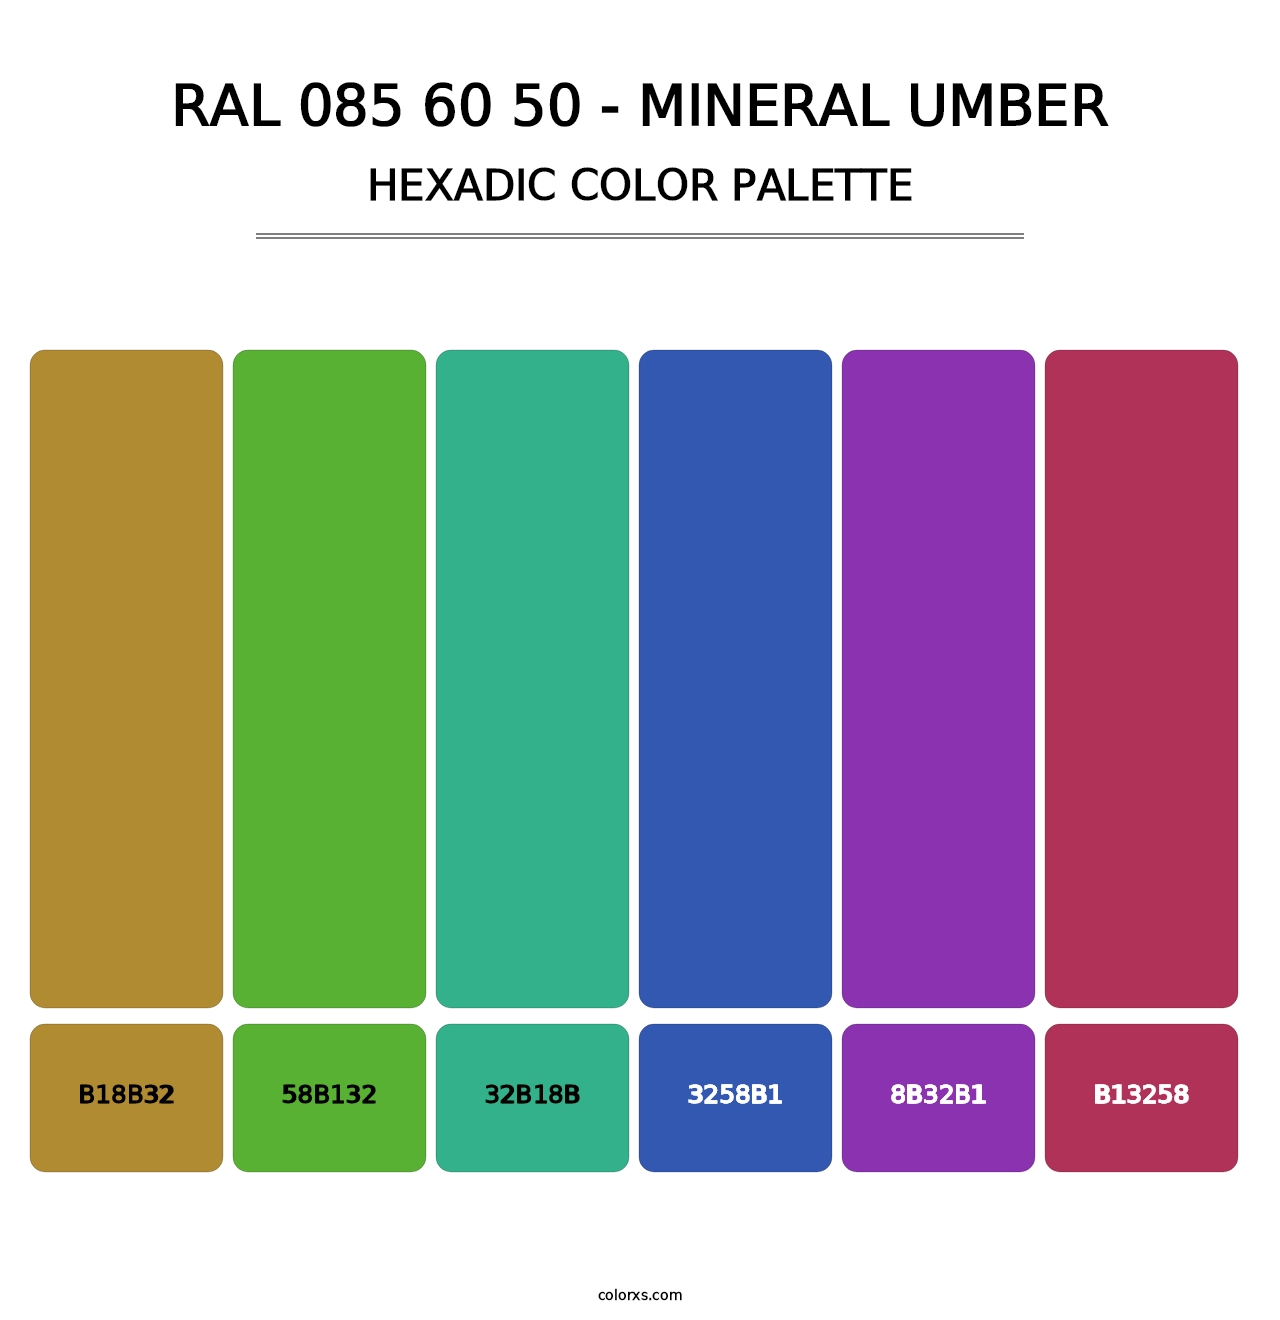 RAL 085 60 50 - Mineral Umber - Hexadic Color Palette